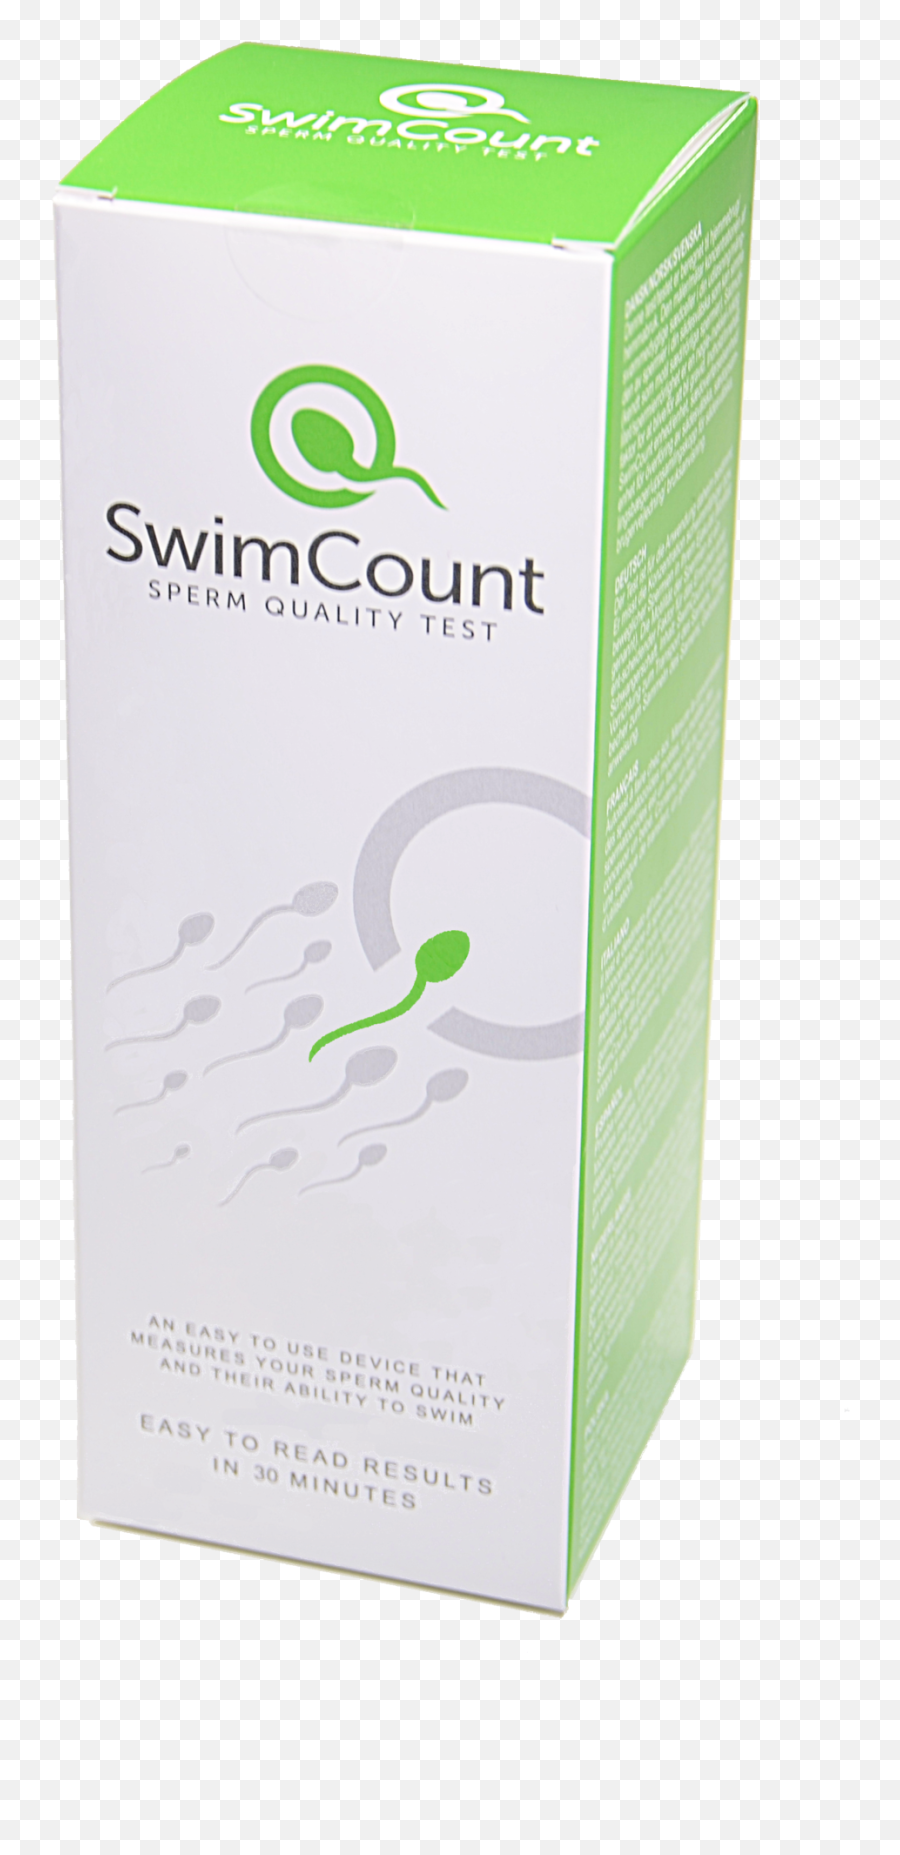 Sperm Png - Swimcount Sperm Quality Test Swimcount Graphics,Sperm Png